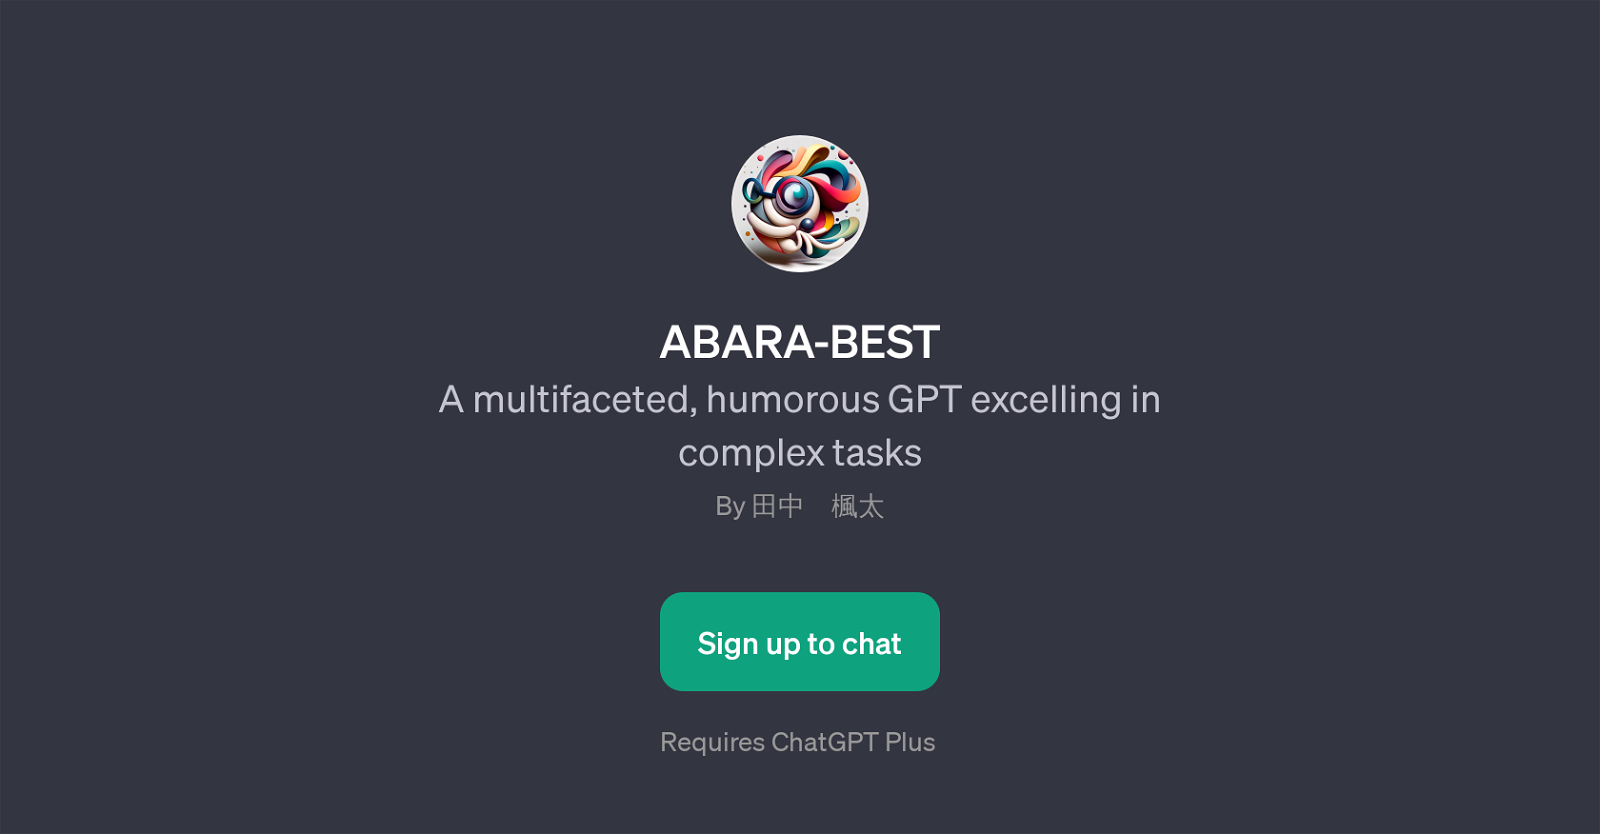 ABARA-BEST website